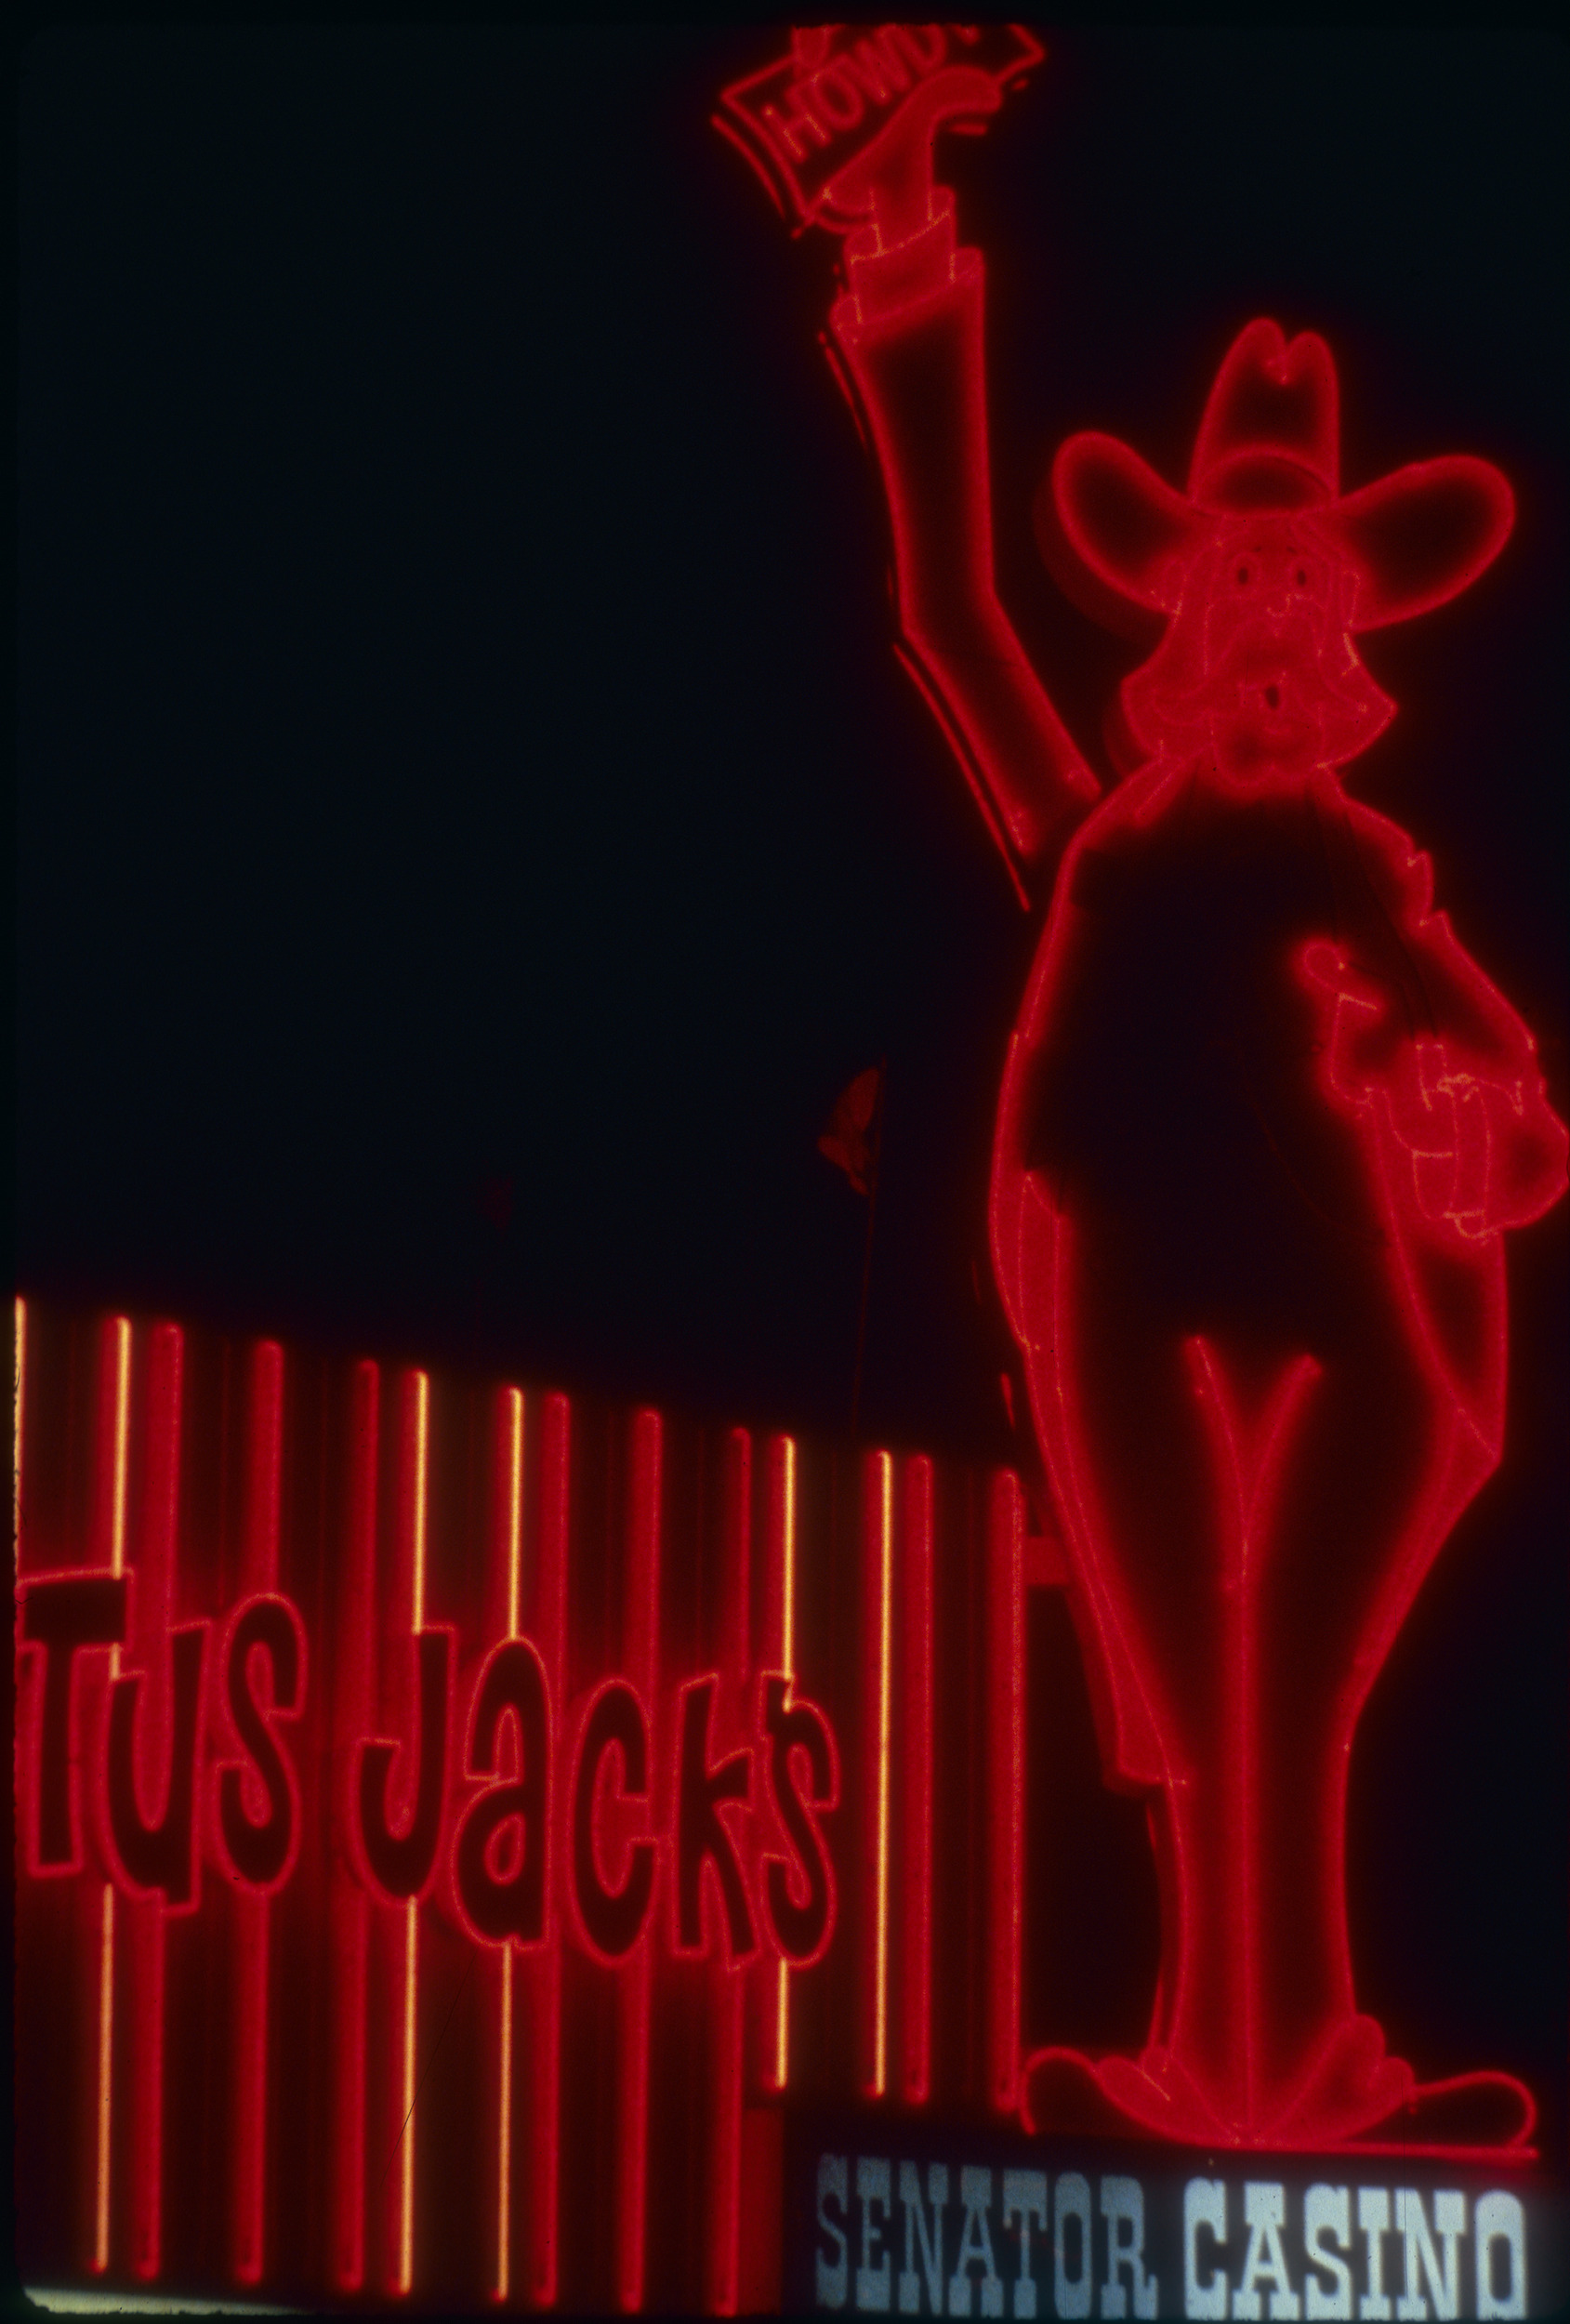 Slide of Cactus Jack's Senator's Club sign, Carson City, Nevada, 1986